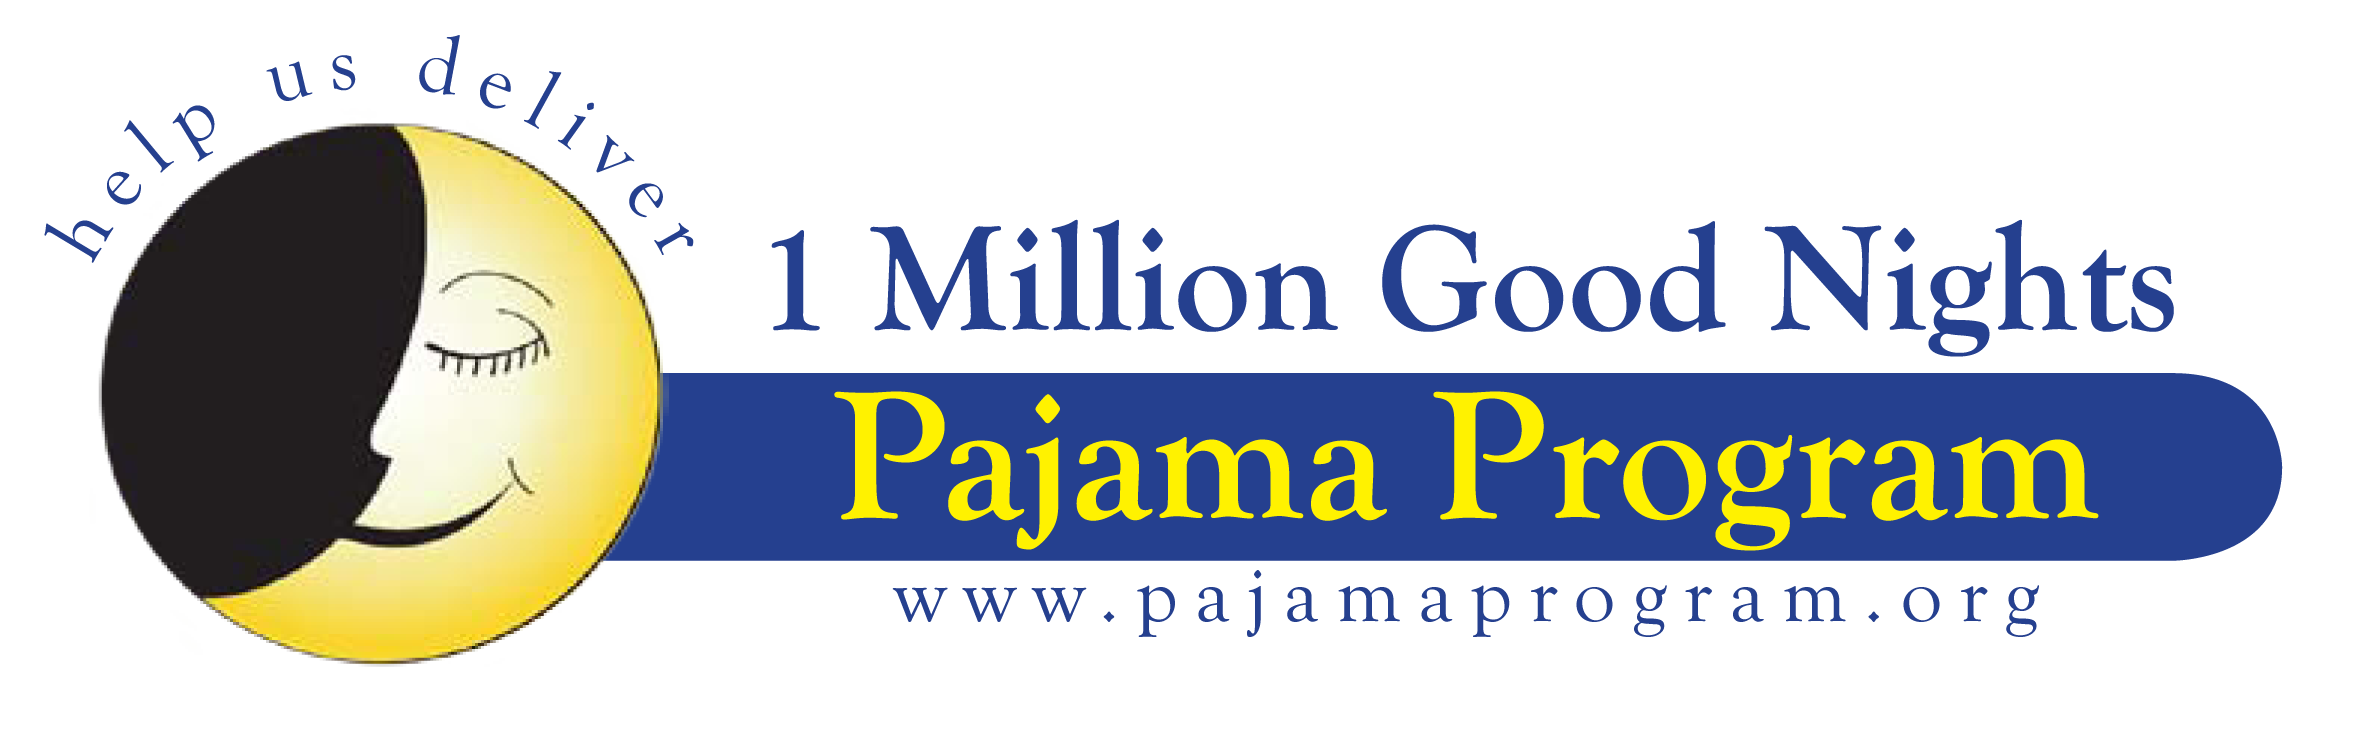 Pajama Program Raises Over $30,000 for Children in Need